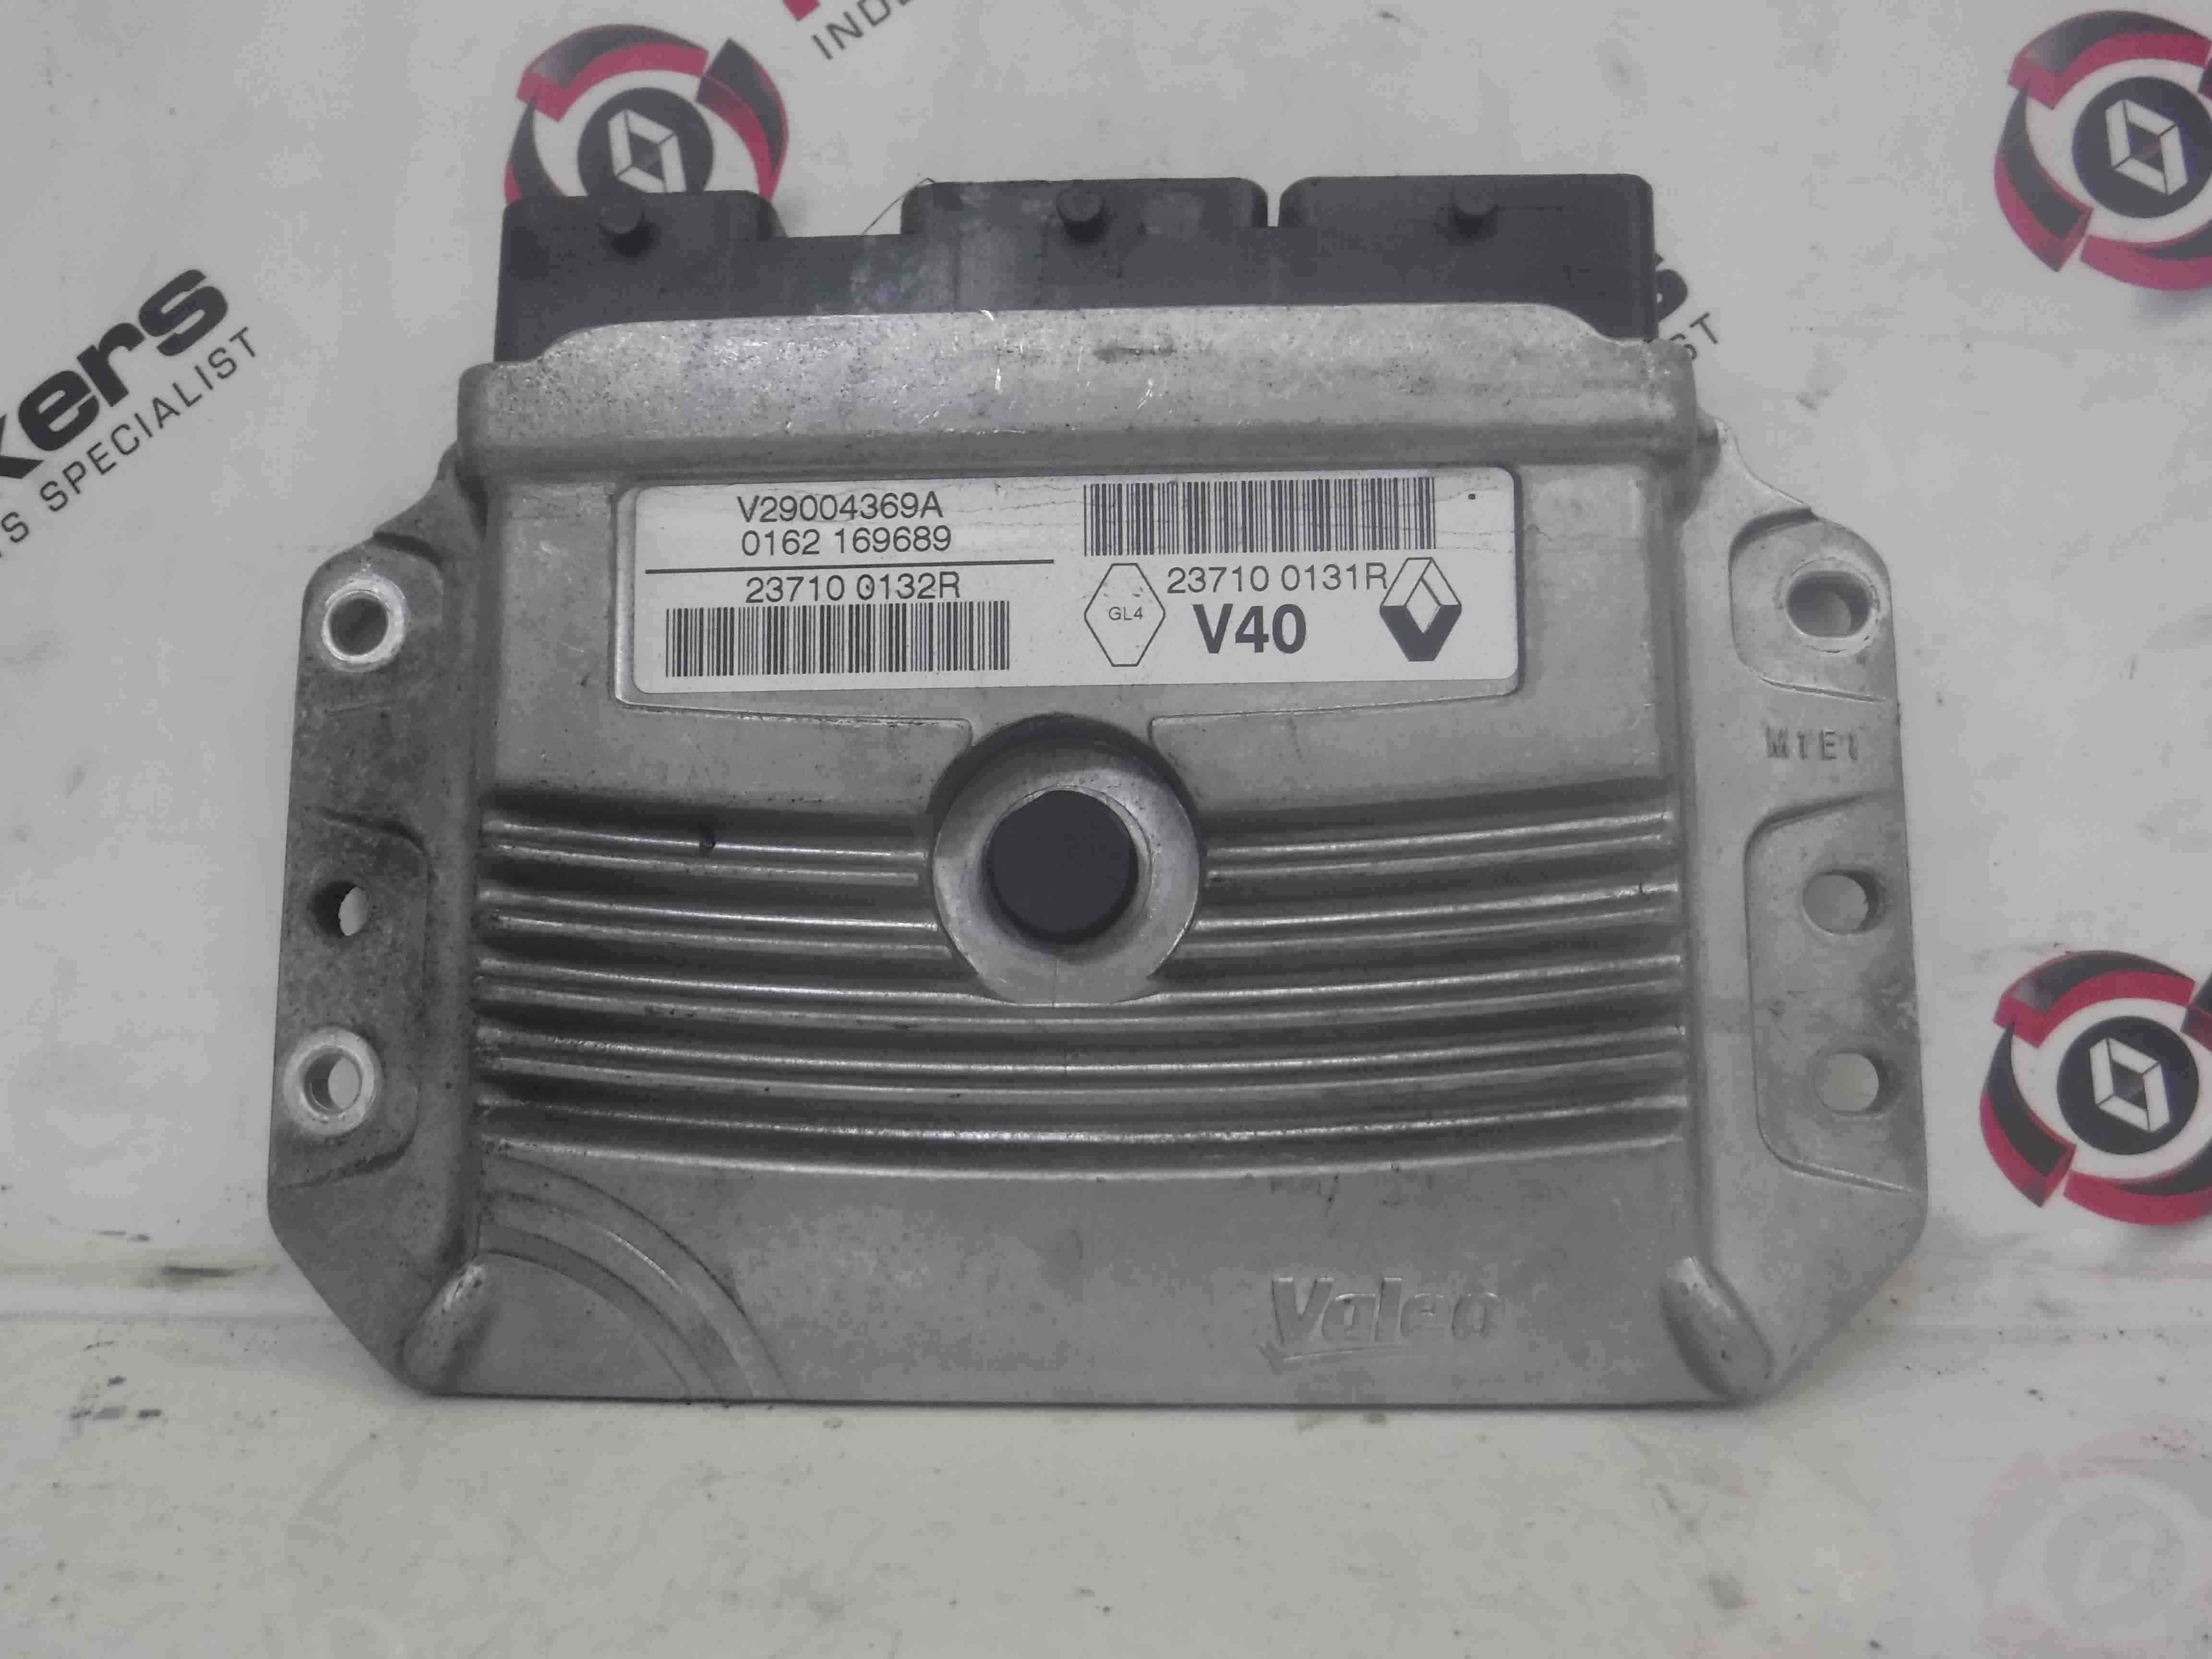 Renault Megane MK3 2008-2014 Engine Control Unit ECU 237100132R 237100131R